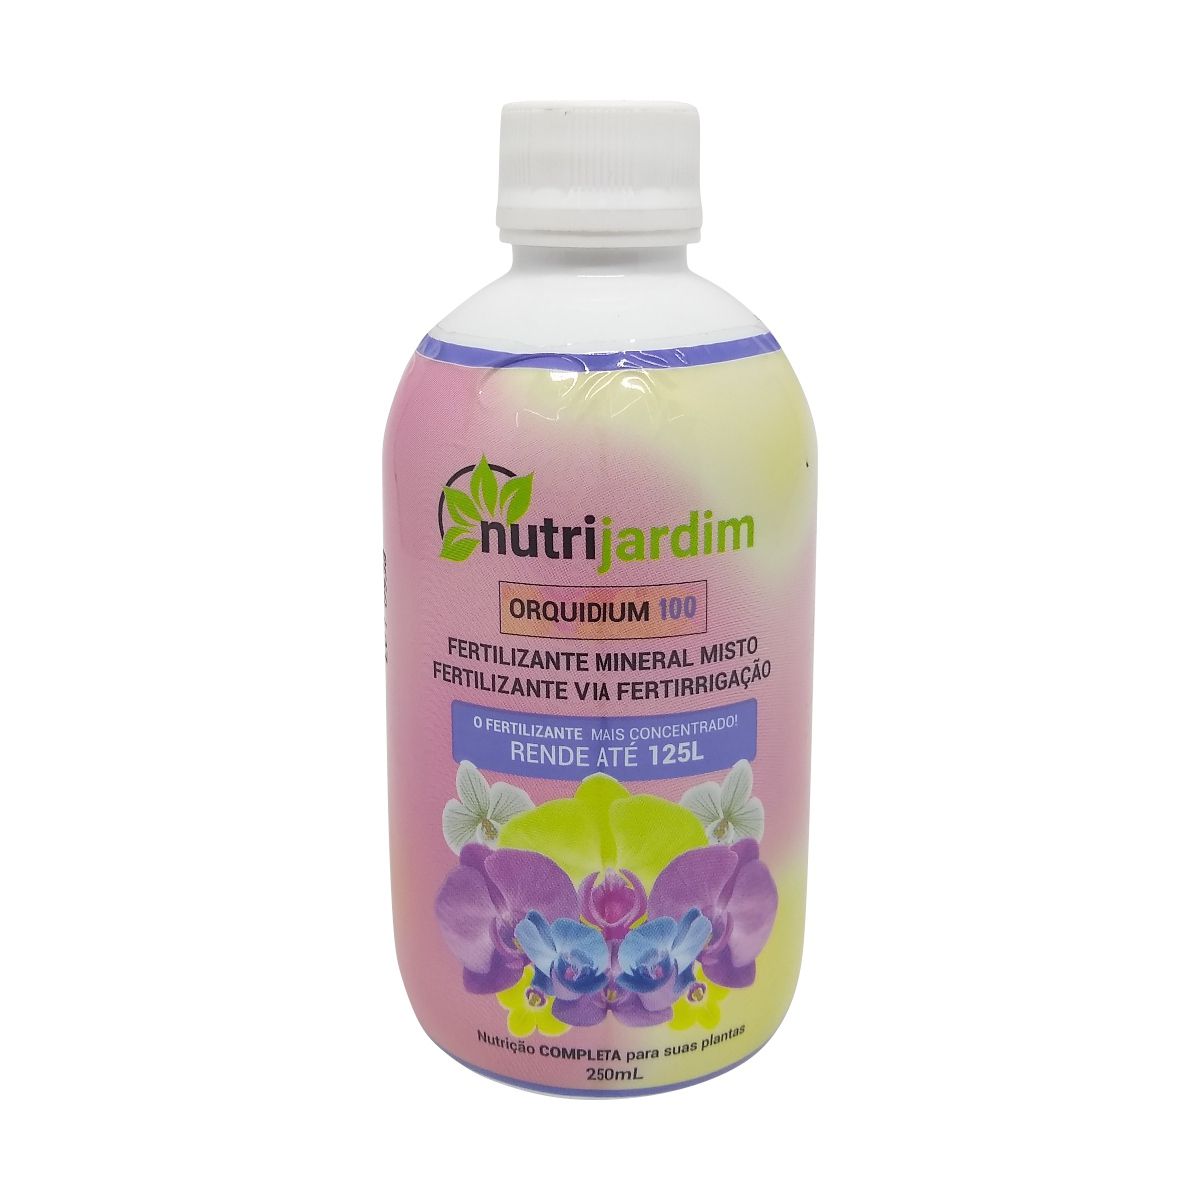 Fertilizante Mineral Misto para Fertirrigação Orquidium 100 concentrado Nutrijardim Rende 125 Litros - Foto 0